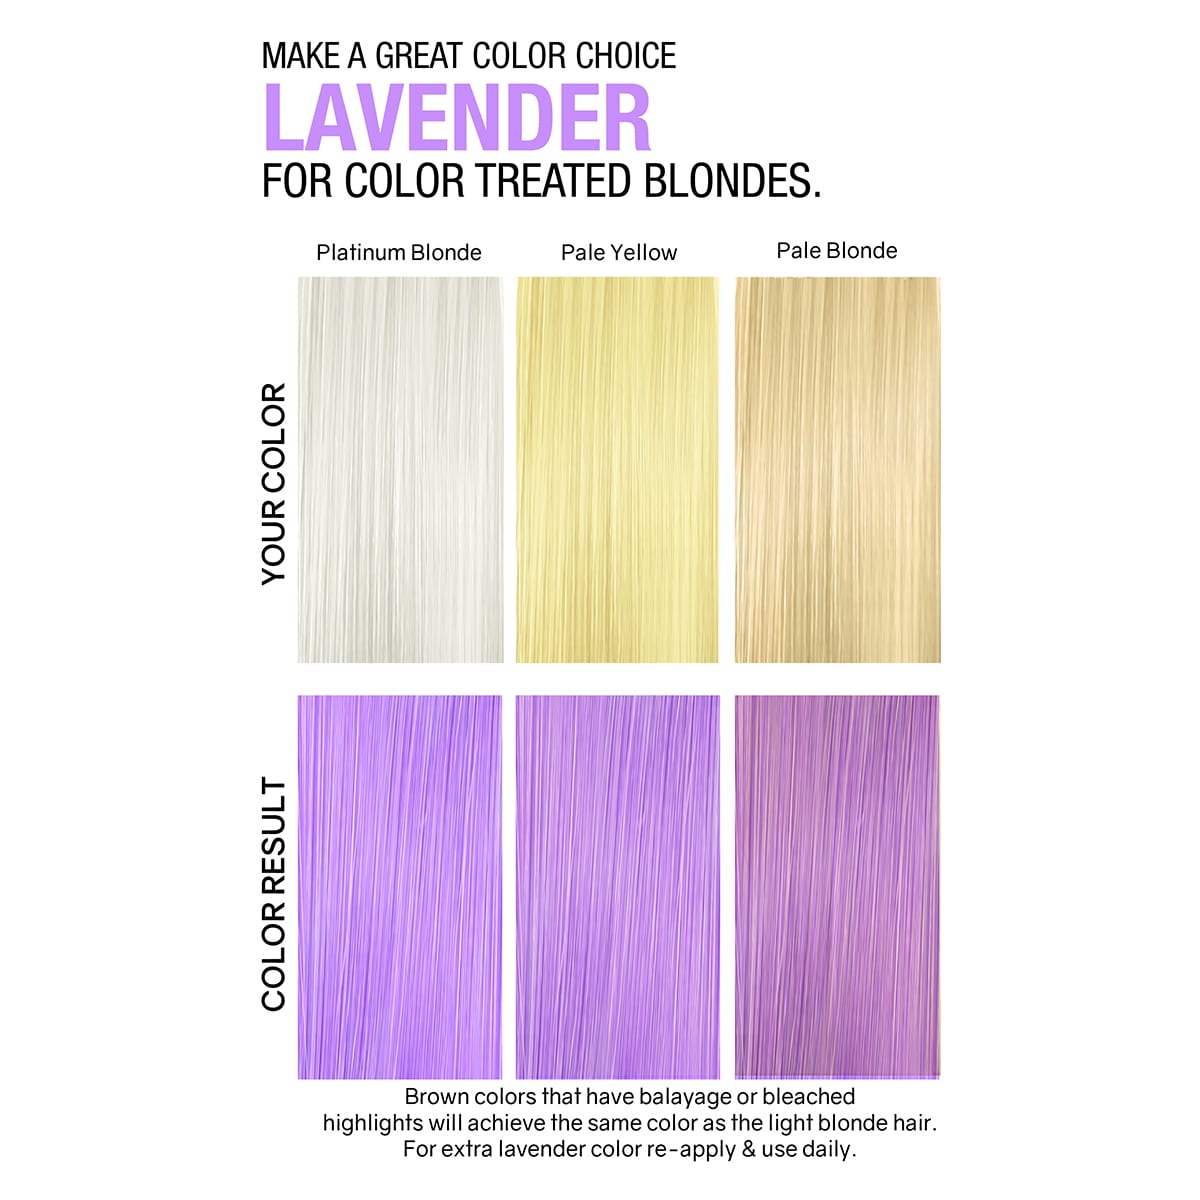 Celeb Luxury Pastel Lavender Colorwash - 8.25 oz (Buy 3 Get 1 Free Mix & Match)